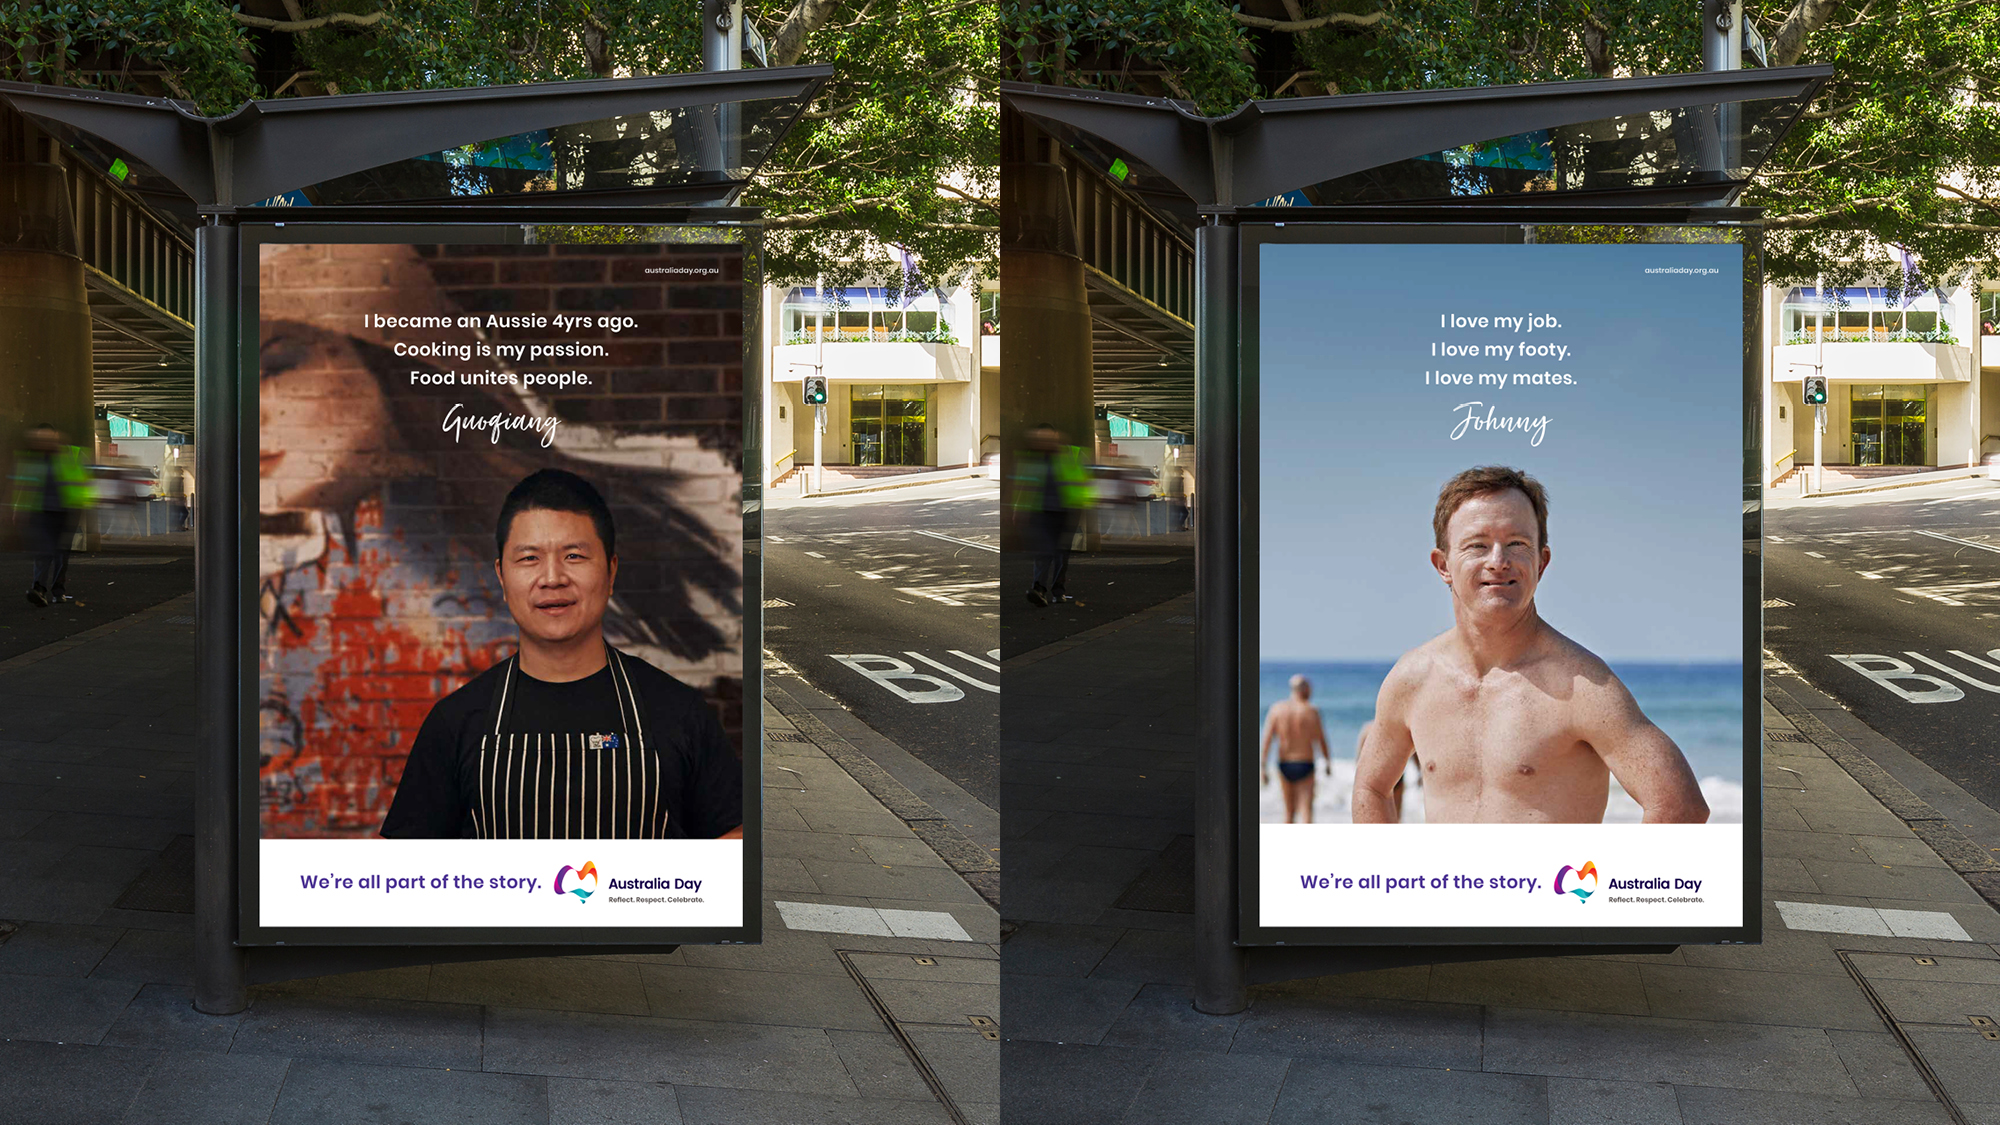 Entity-3-Three-Brand-Design-Agency-Sydney-Australia-Day-11-campaign-ooh-bus-shelter-ads